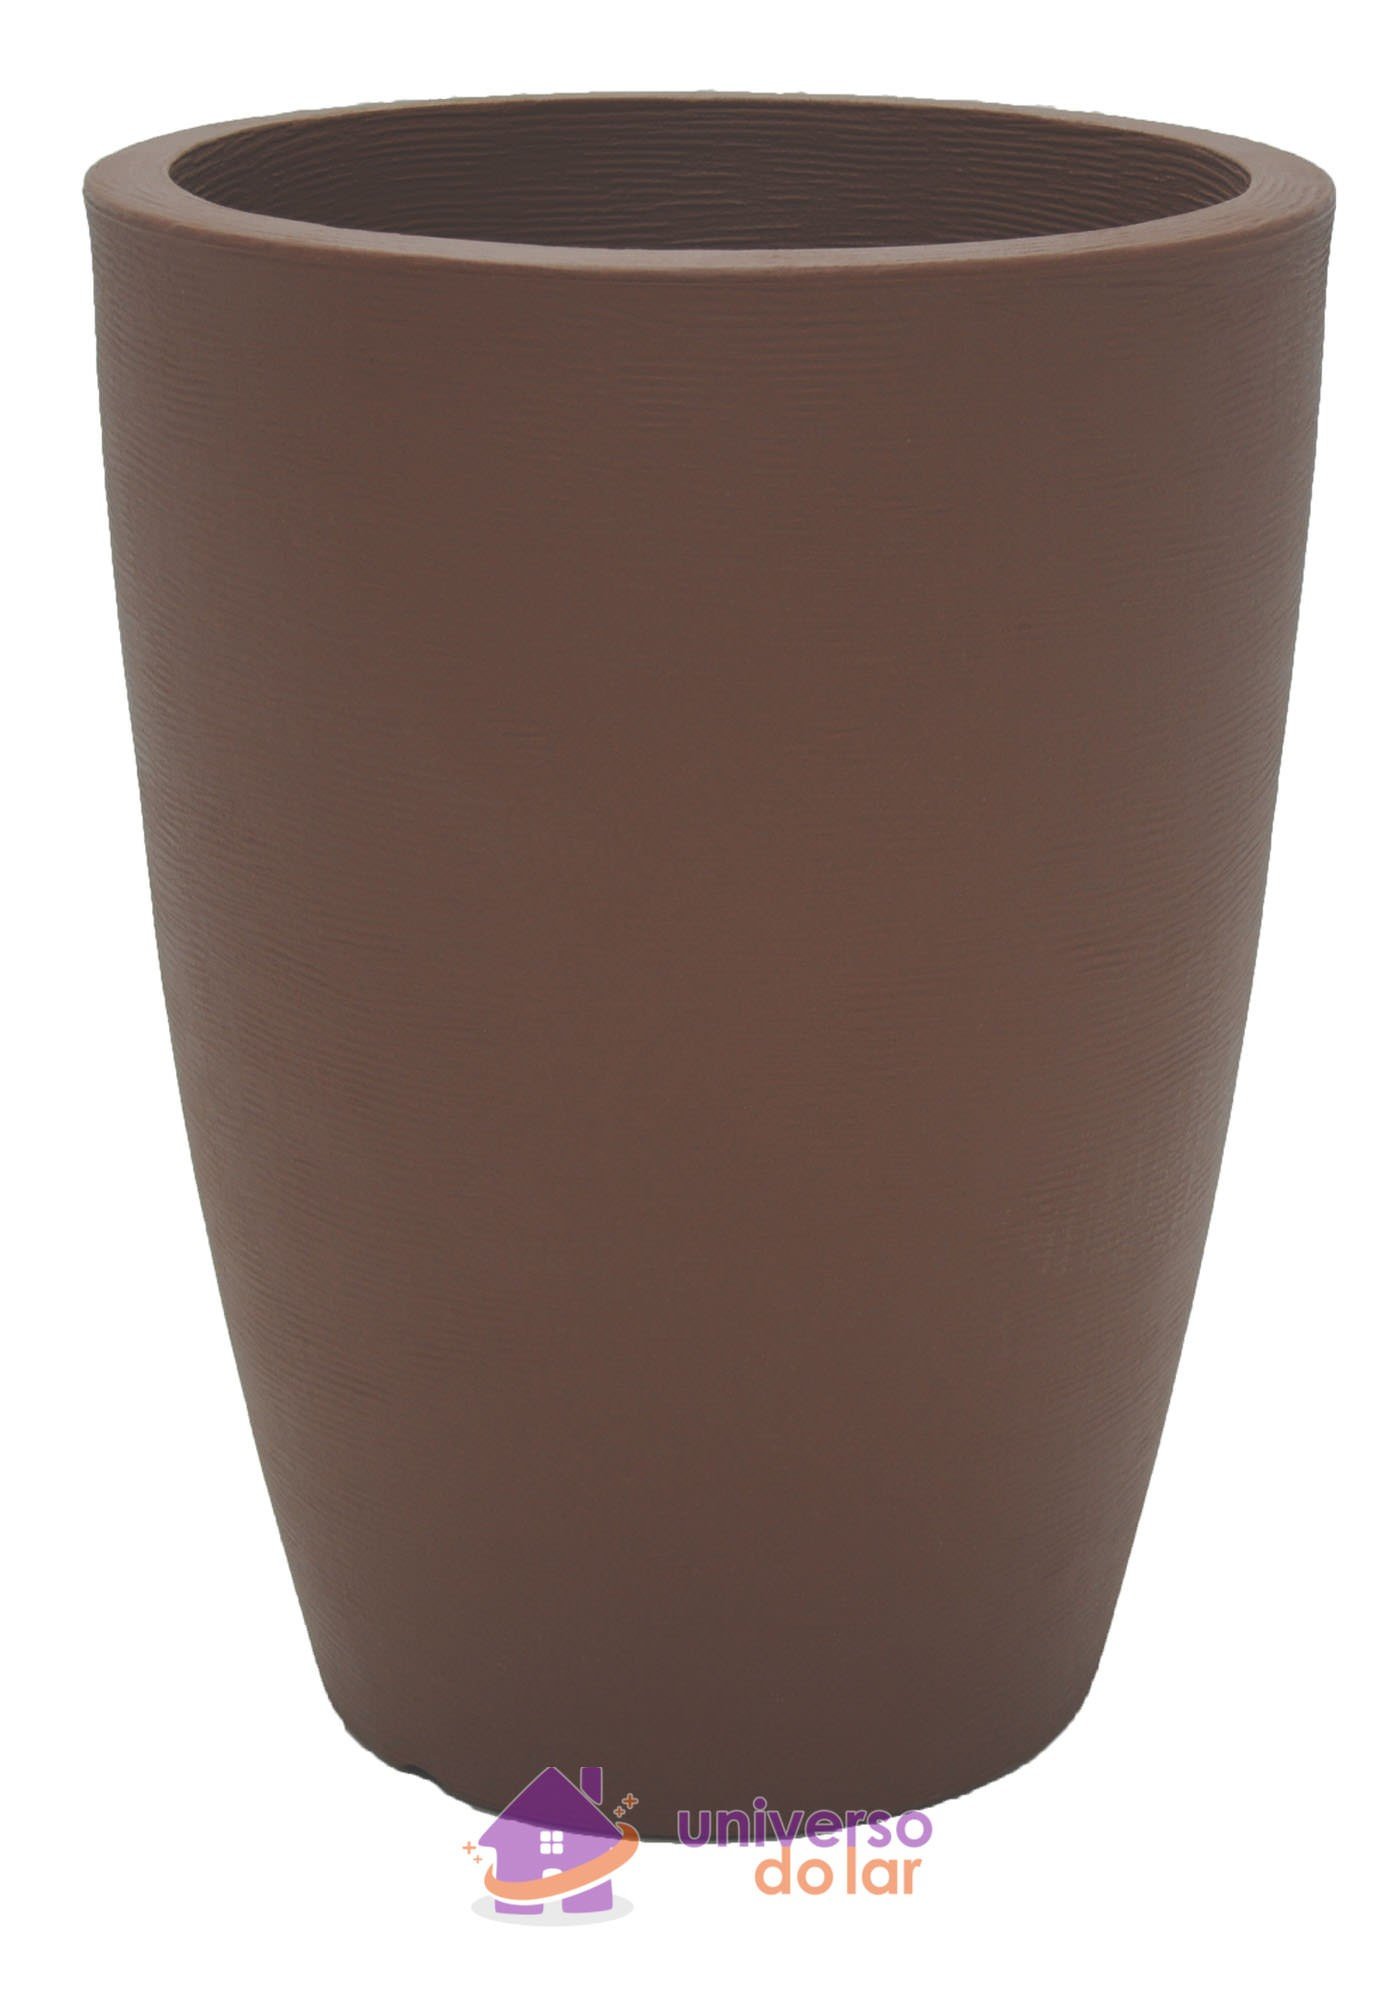 Vaso Thai em Polietileno Marrom 67 cm